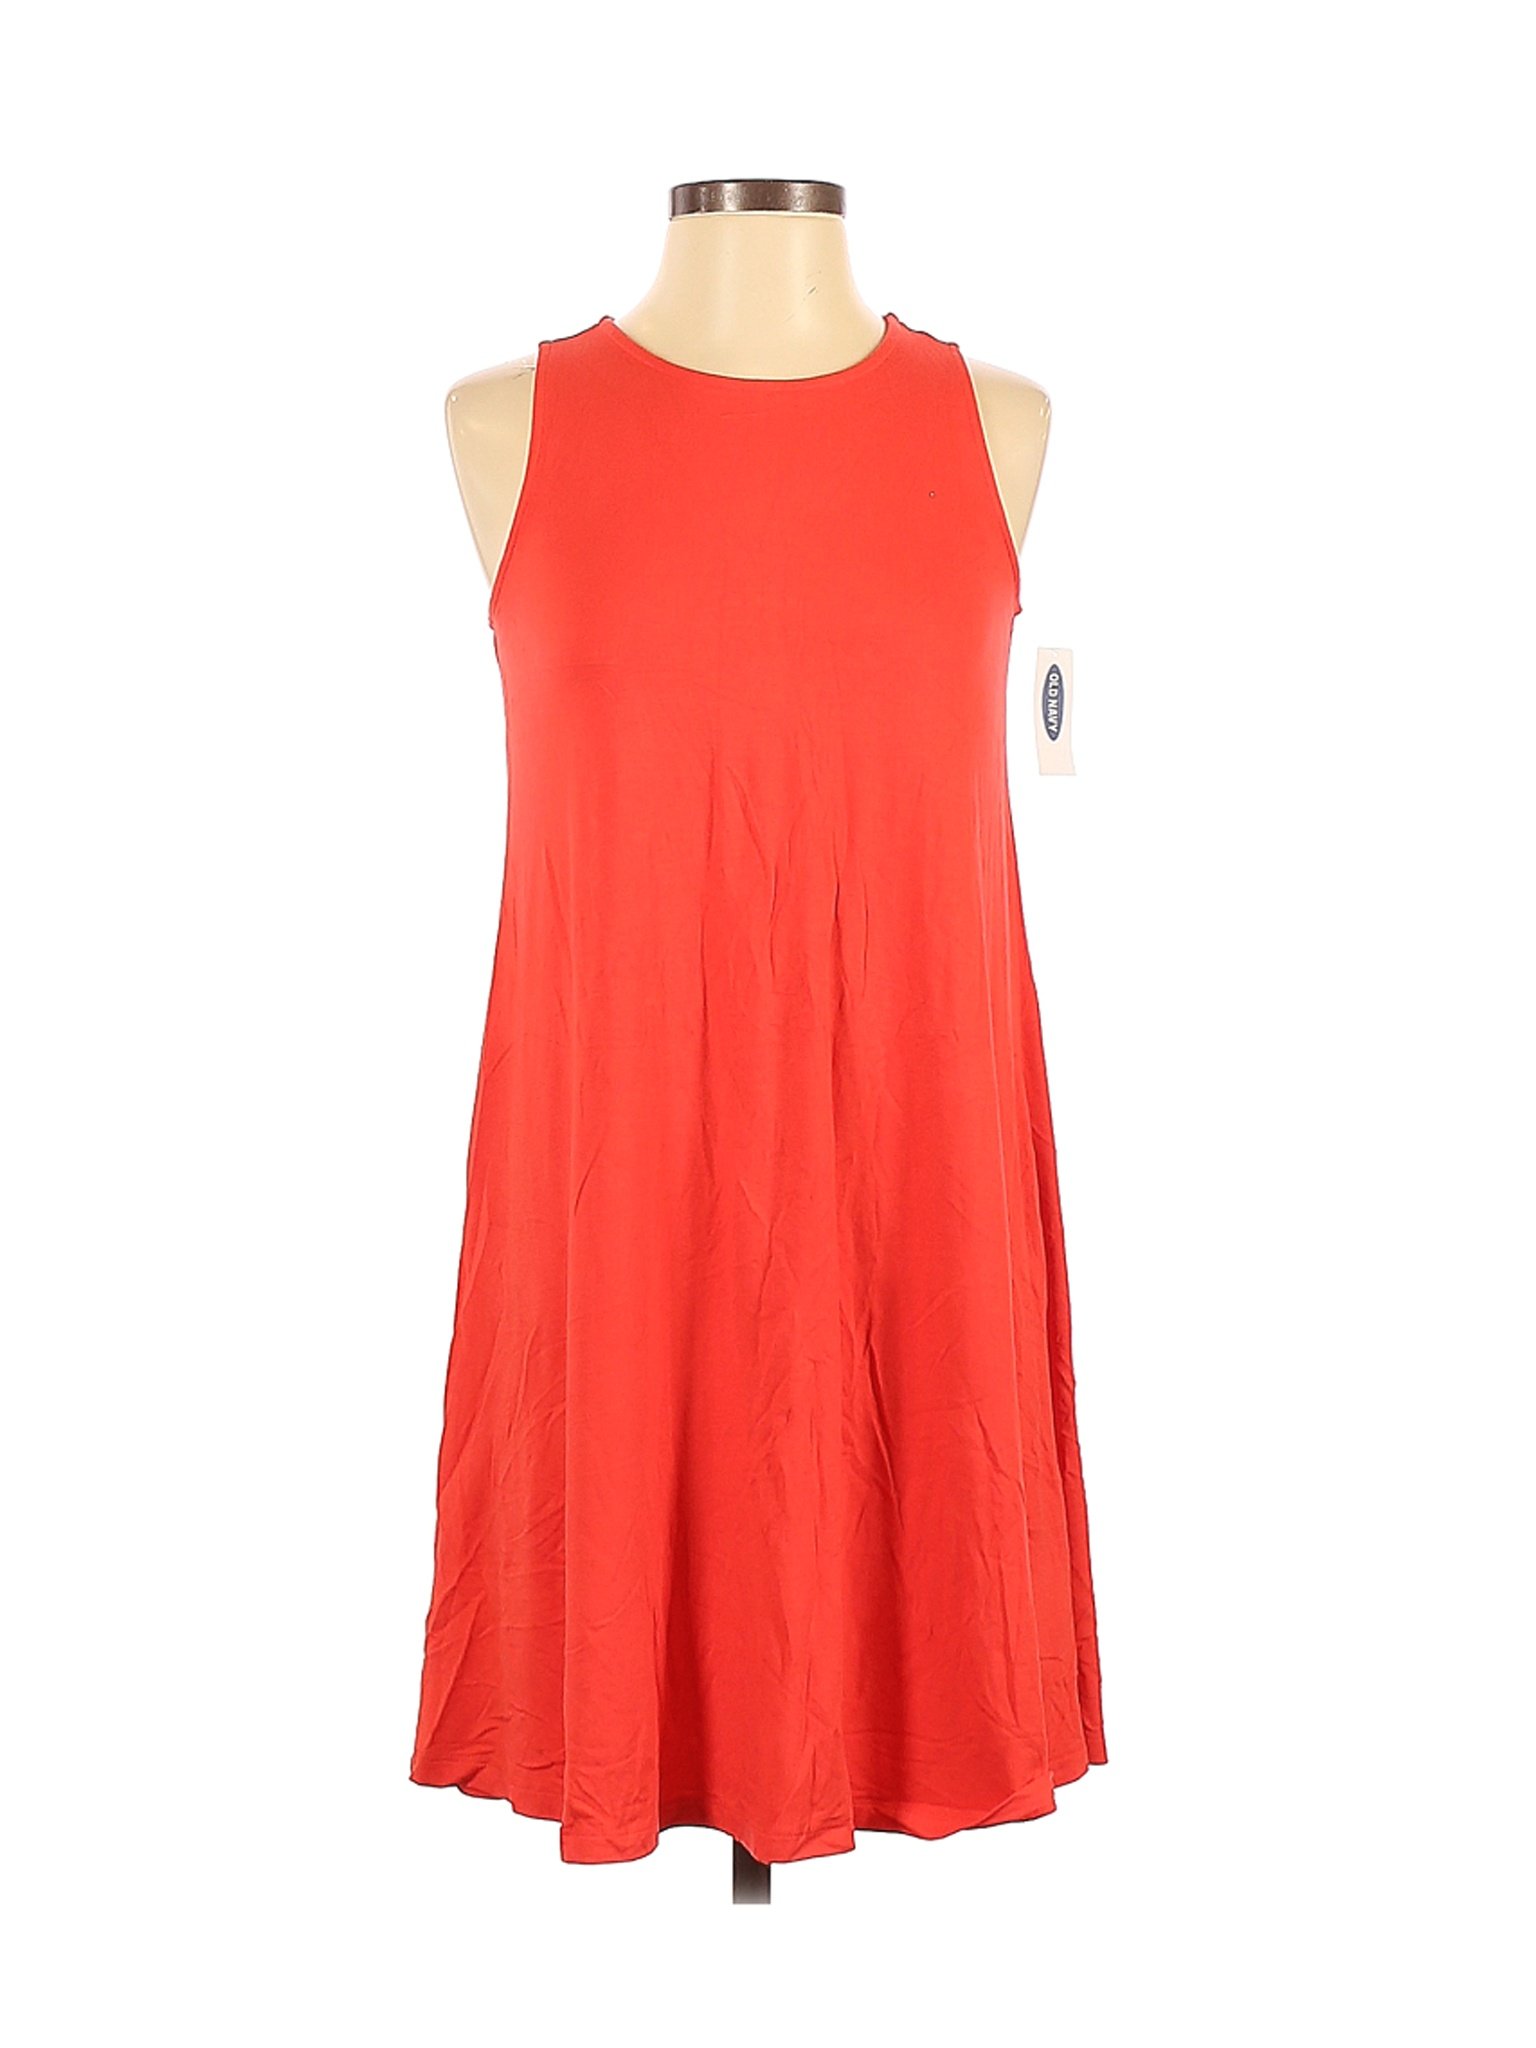 NWT Old Navy Women Orange Casual Dress XS | eBay